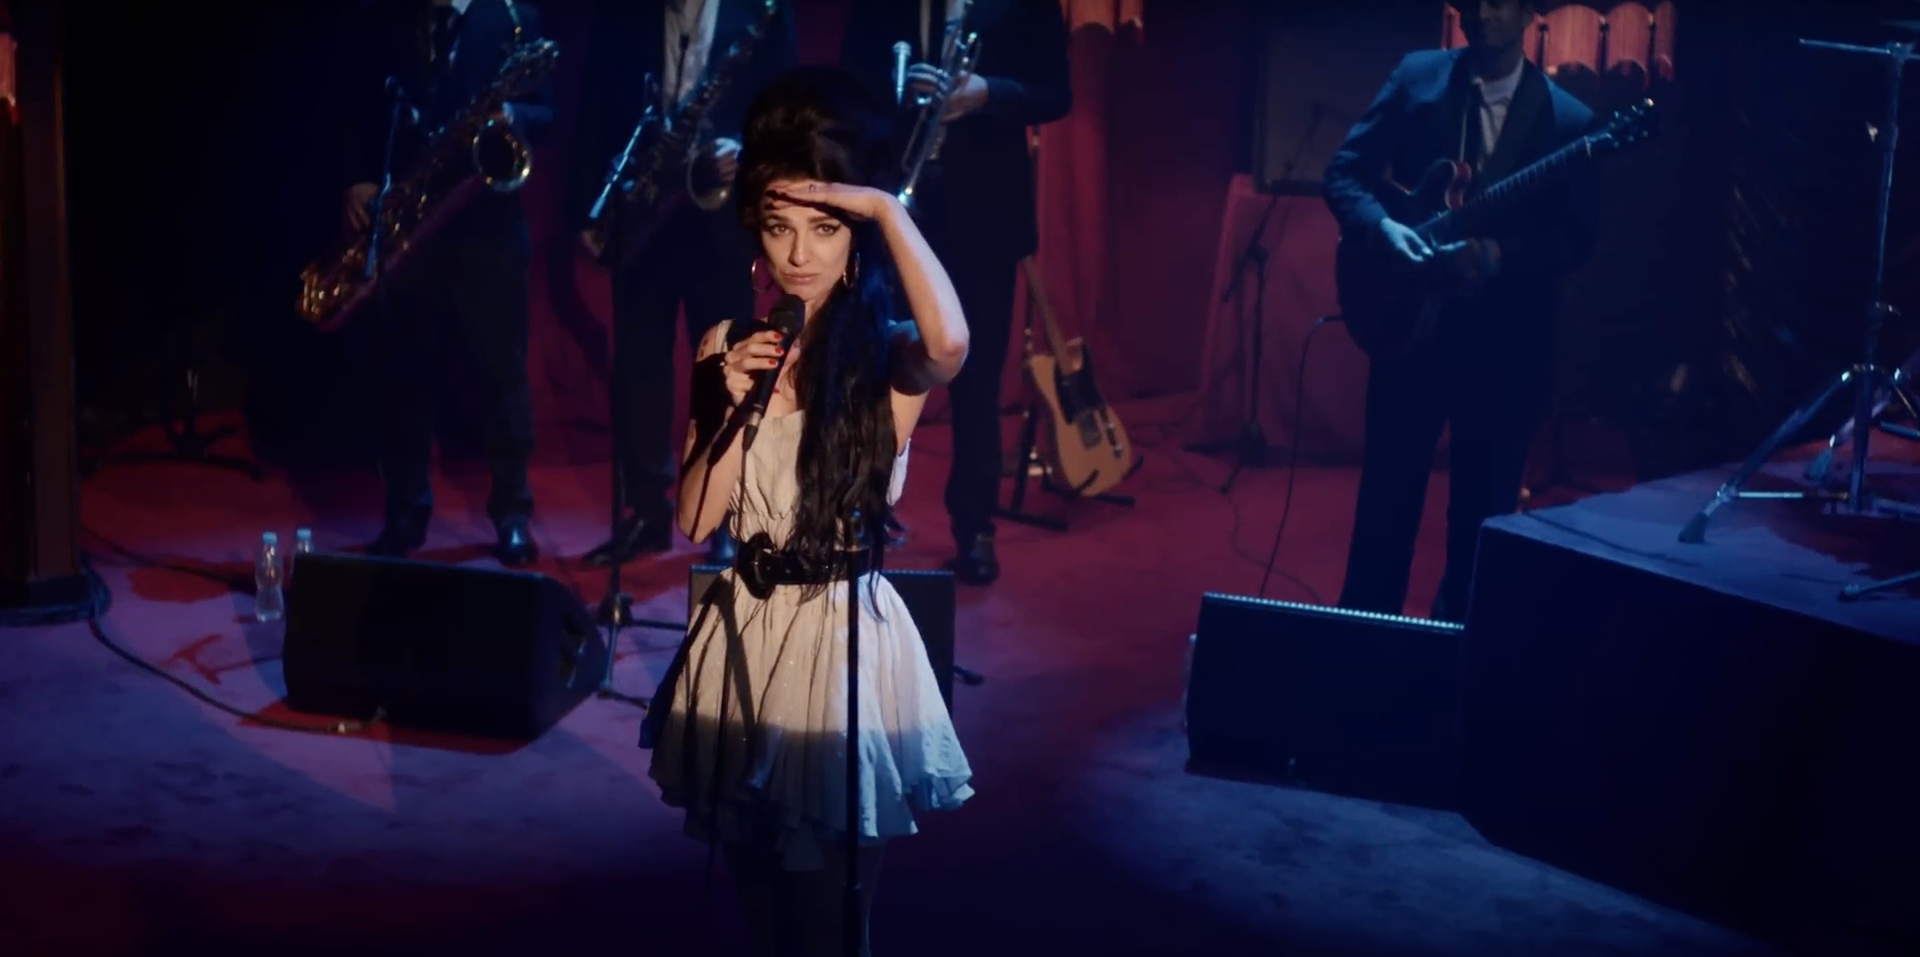 Lanzar trailer del Biopic de Amy Winehouse: "Back to Black"